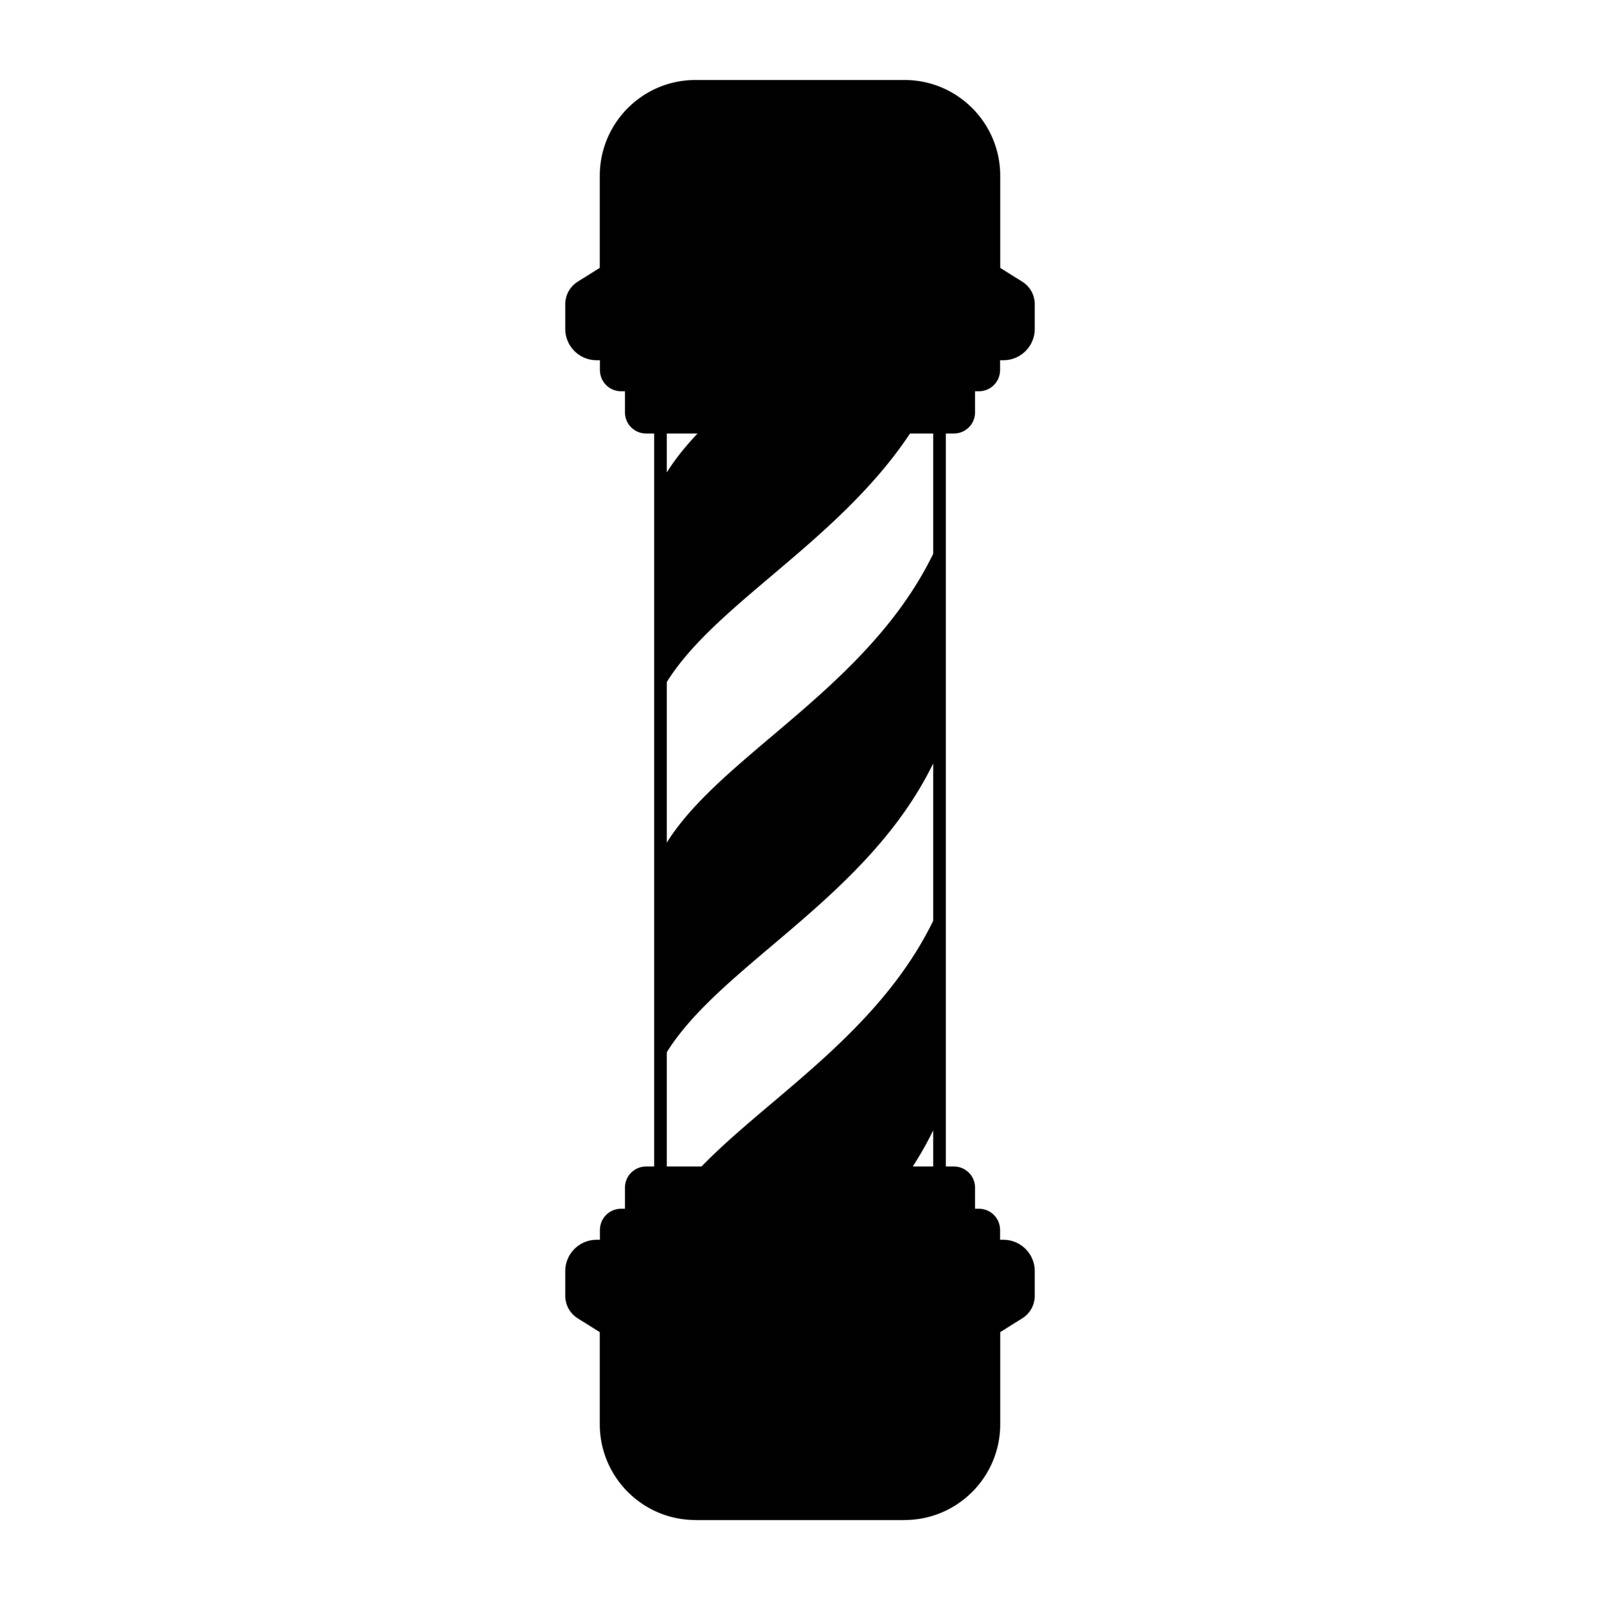 Barber shop pole icon black color vector illustration flat style simple image